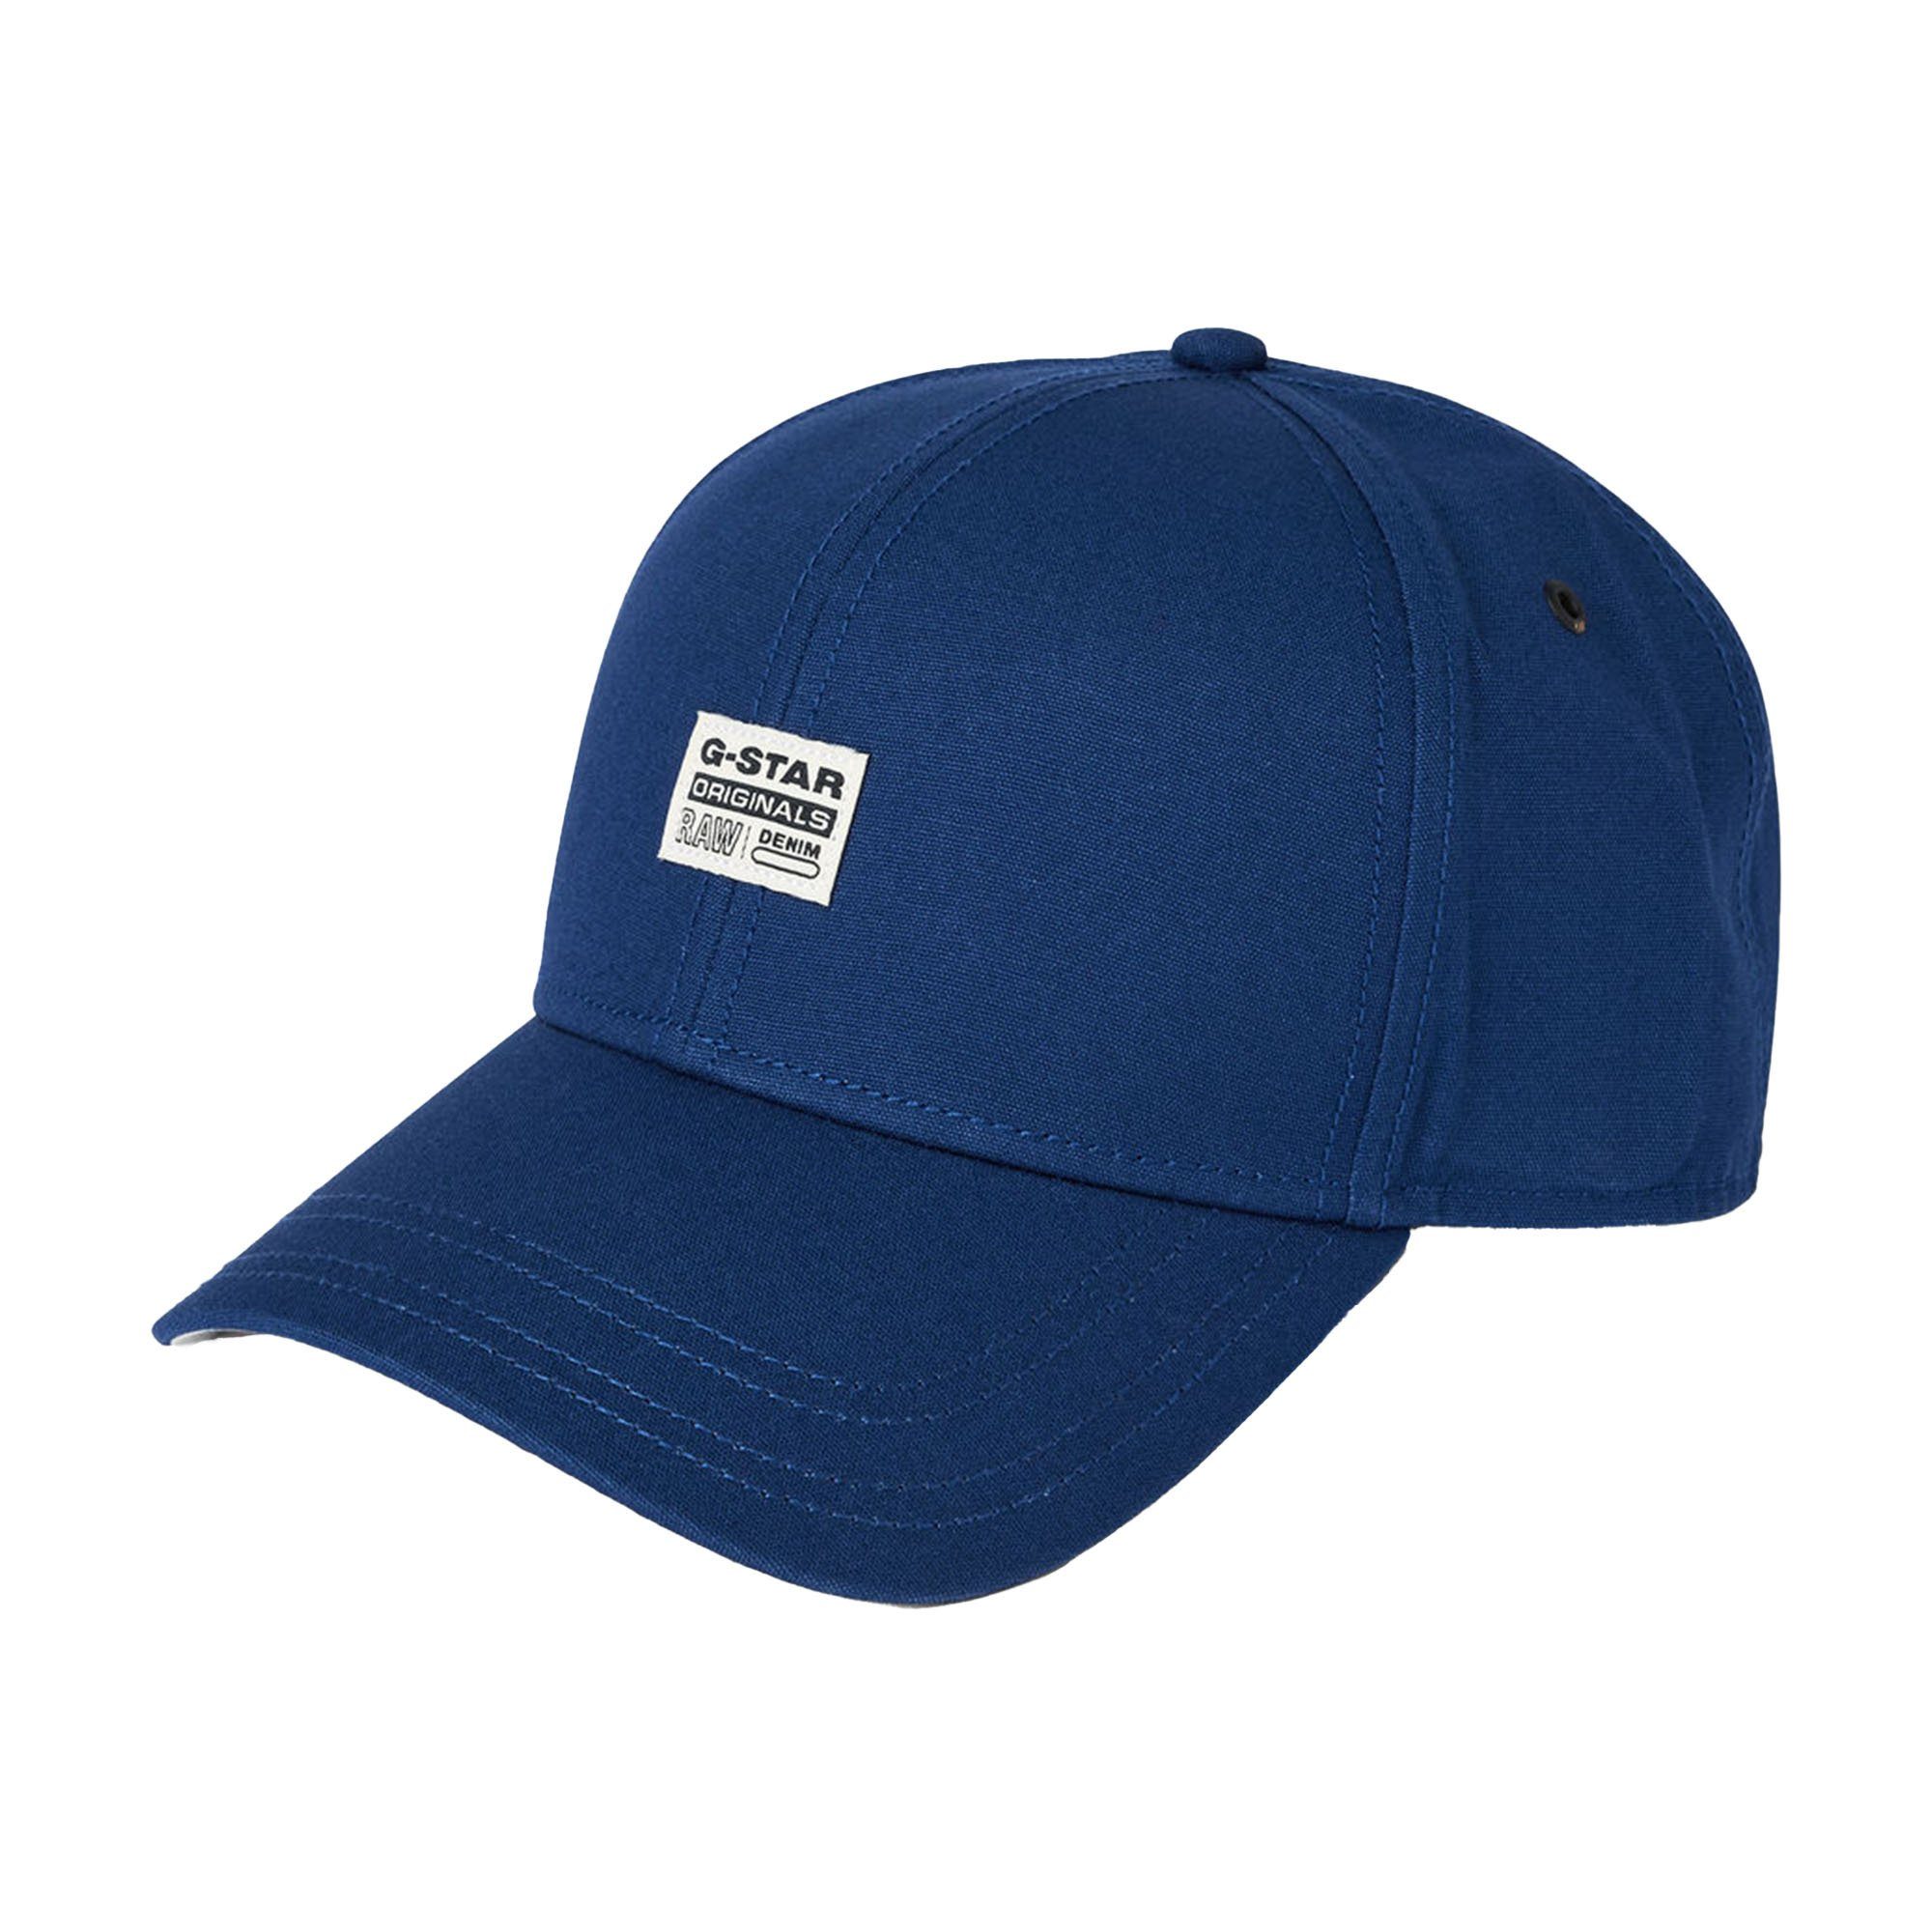 Originals Cap G-Star Cap Logo RAW - cap, Blau Käppi, baseball Herren Baseball